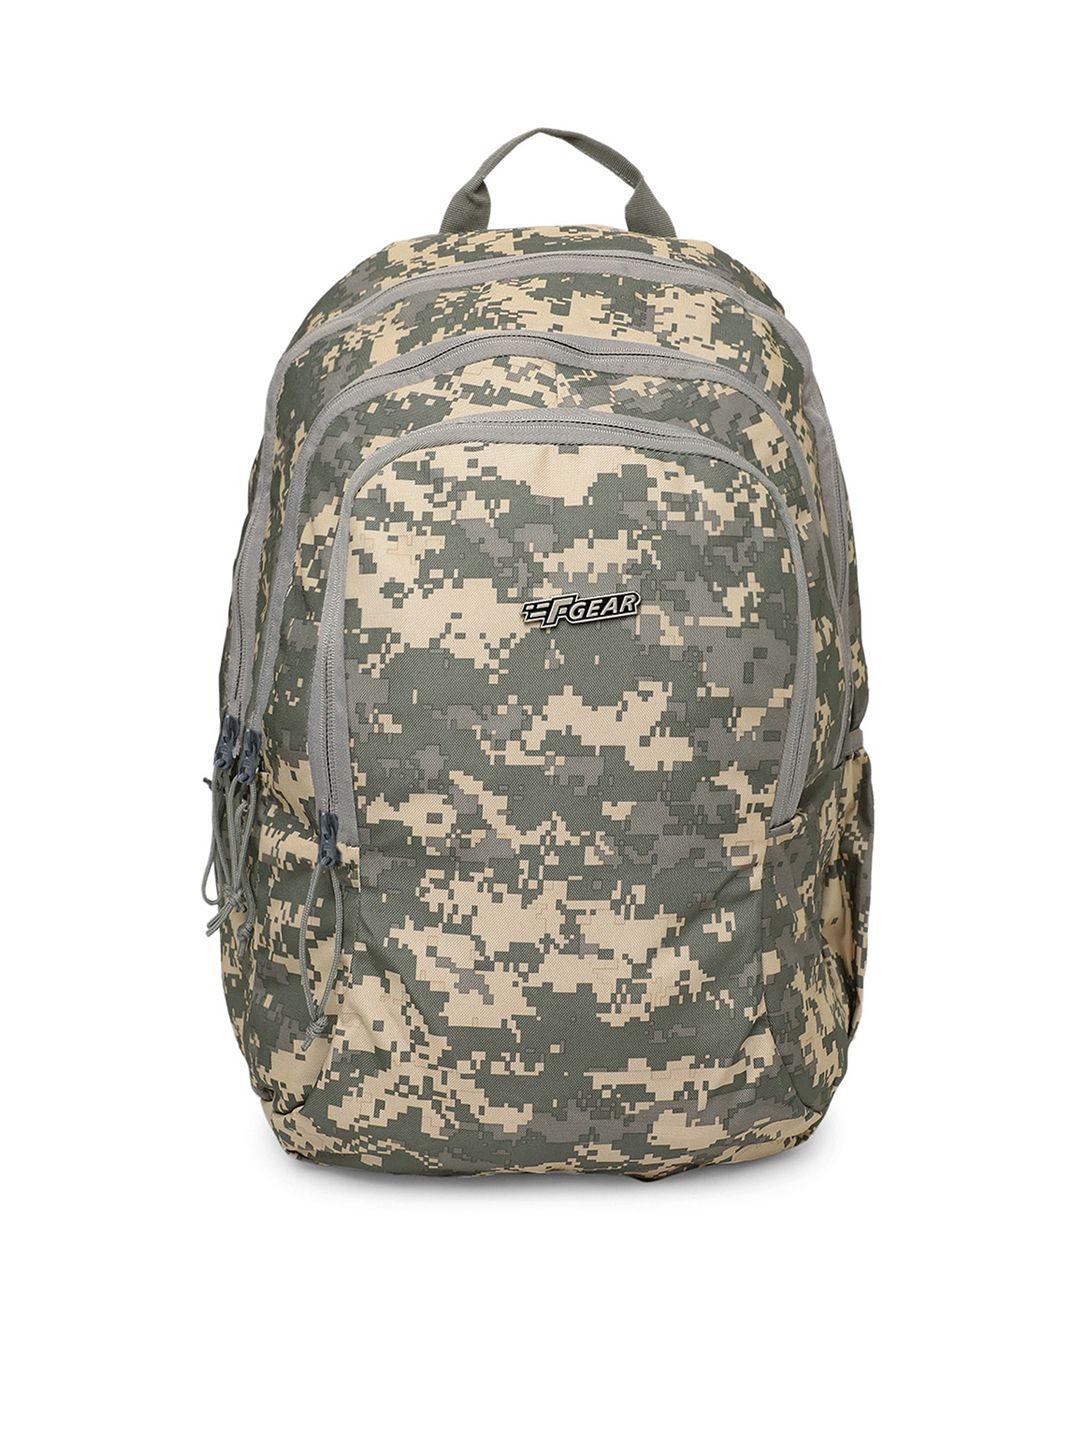 f gear unisex green & cream-coloured backpack